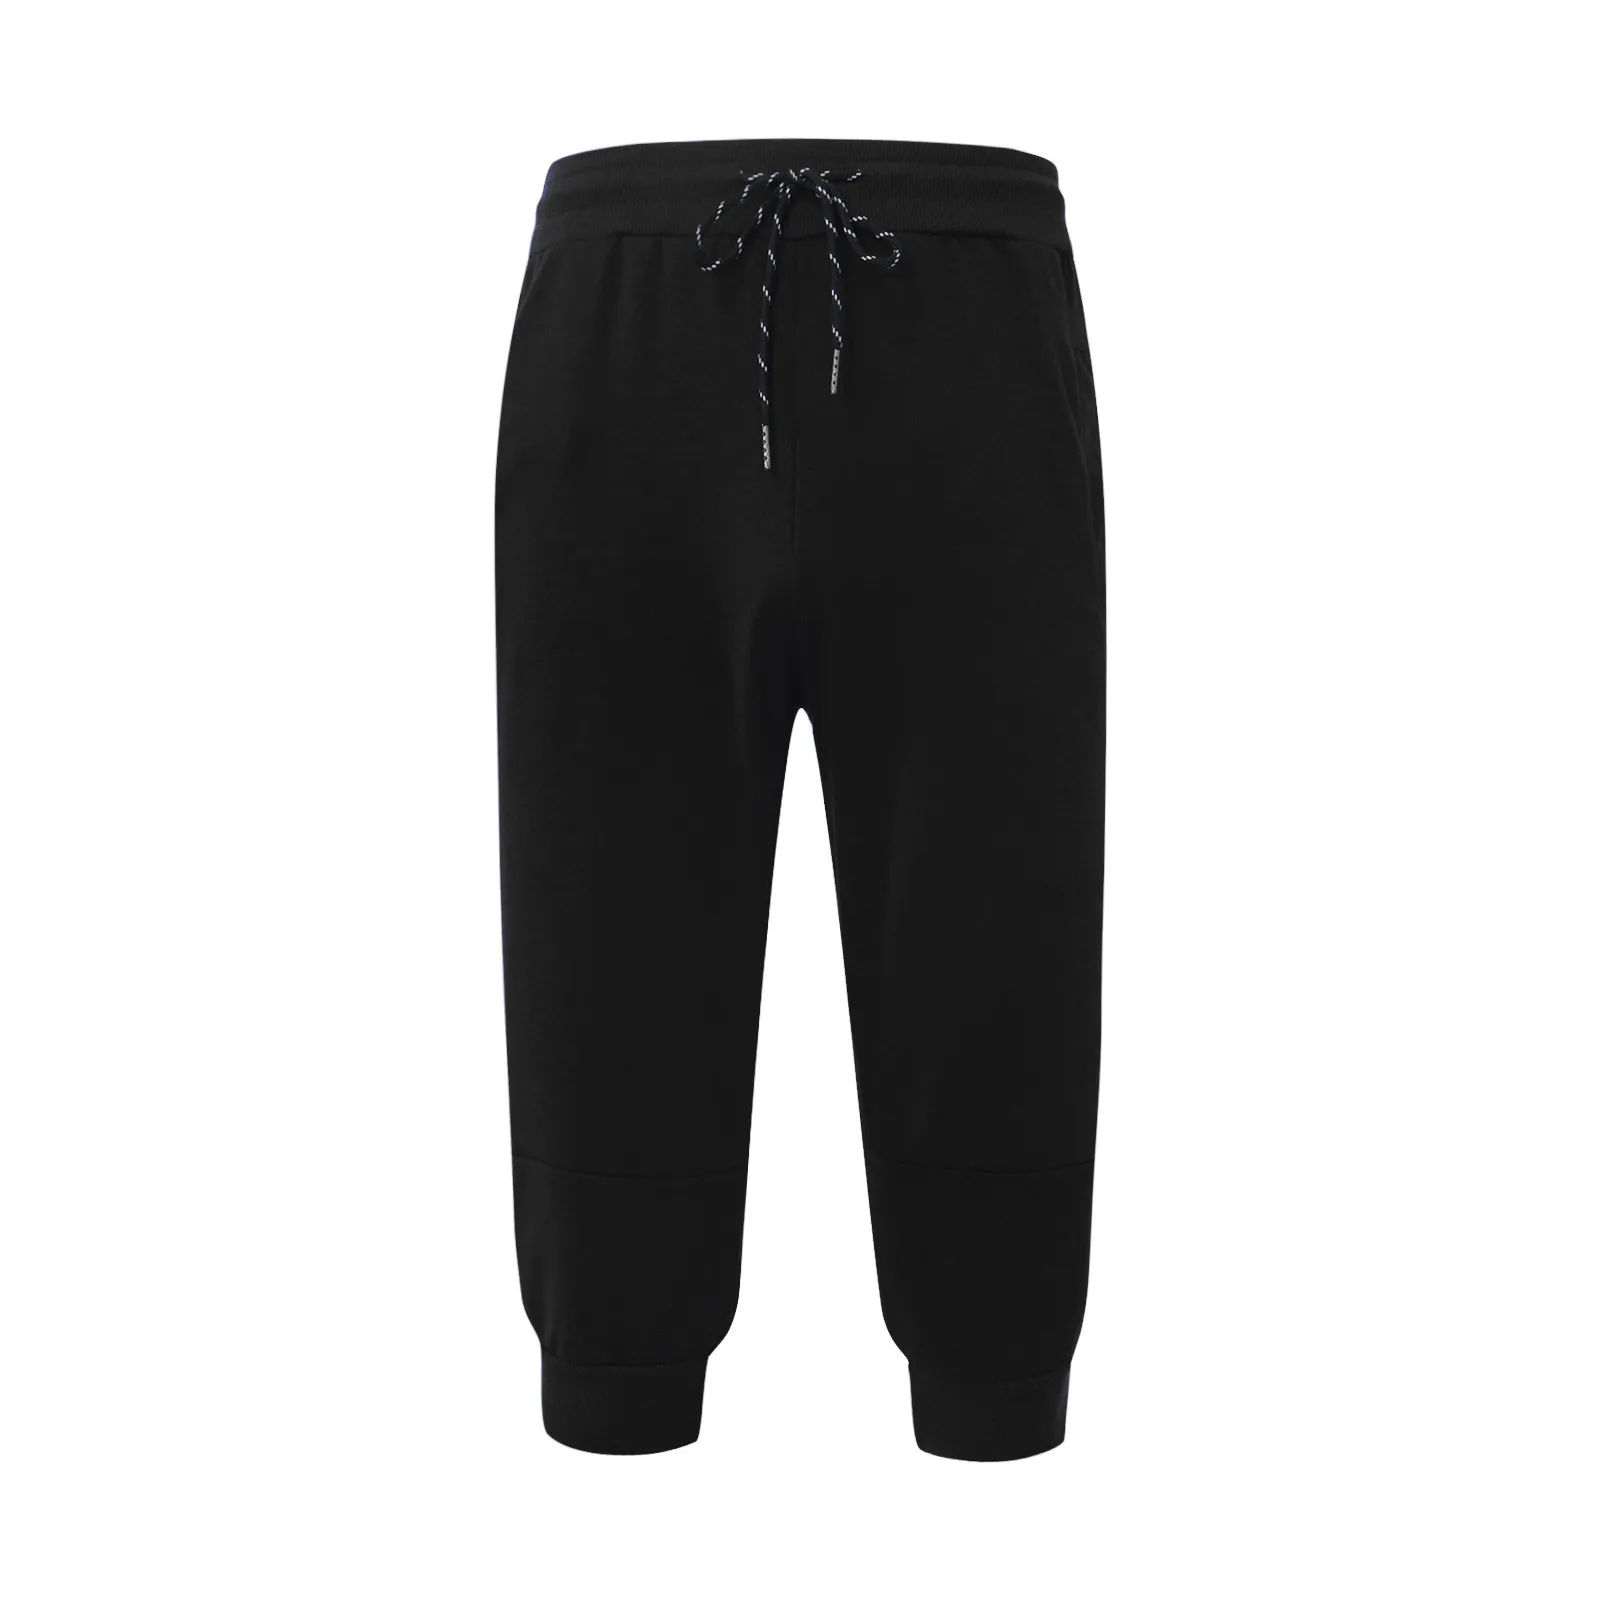 XINHUXIN New Mens Casual Shorts 3/4 Jogger Capri Pants Printing Below Knee Sports Pants with Drawstring Elastic Waist 